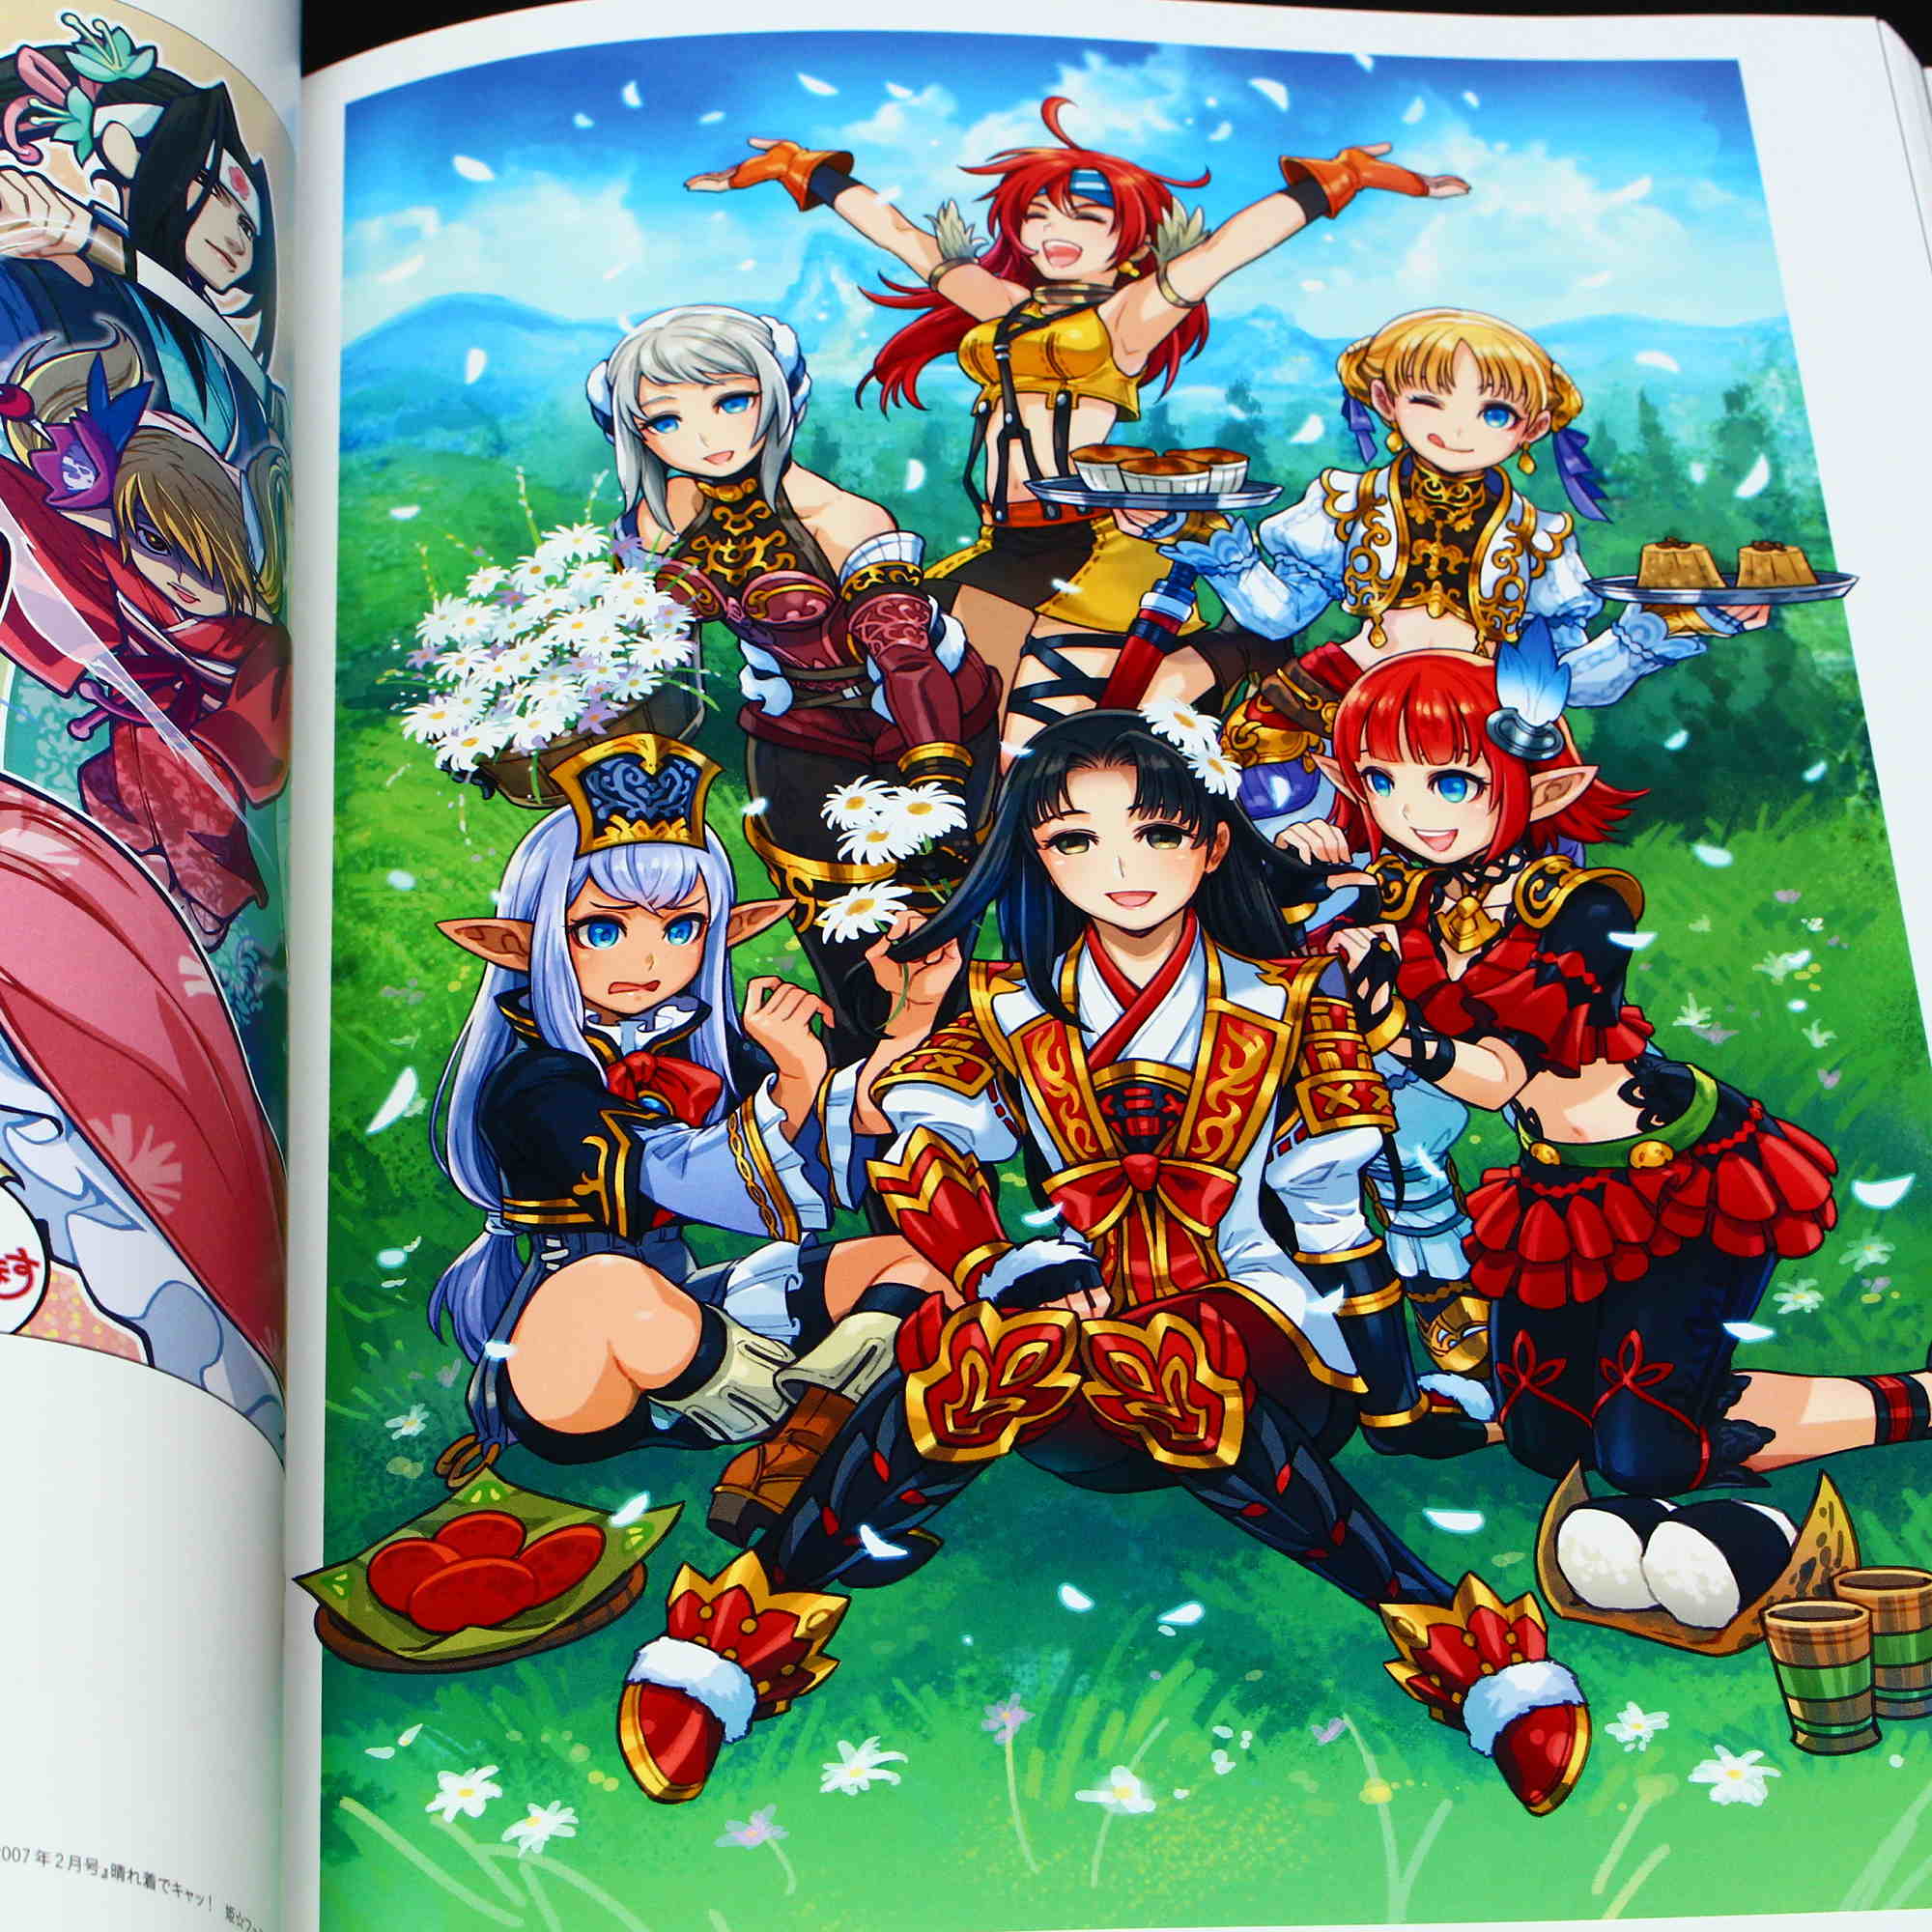 Final Fantasy XI 11 Minagawa Fumio Illustrations Art Book MMORPG Game  Design for sale online